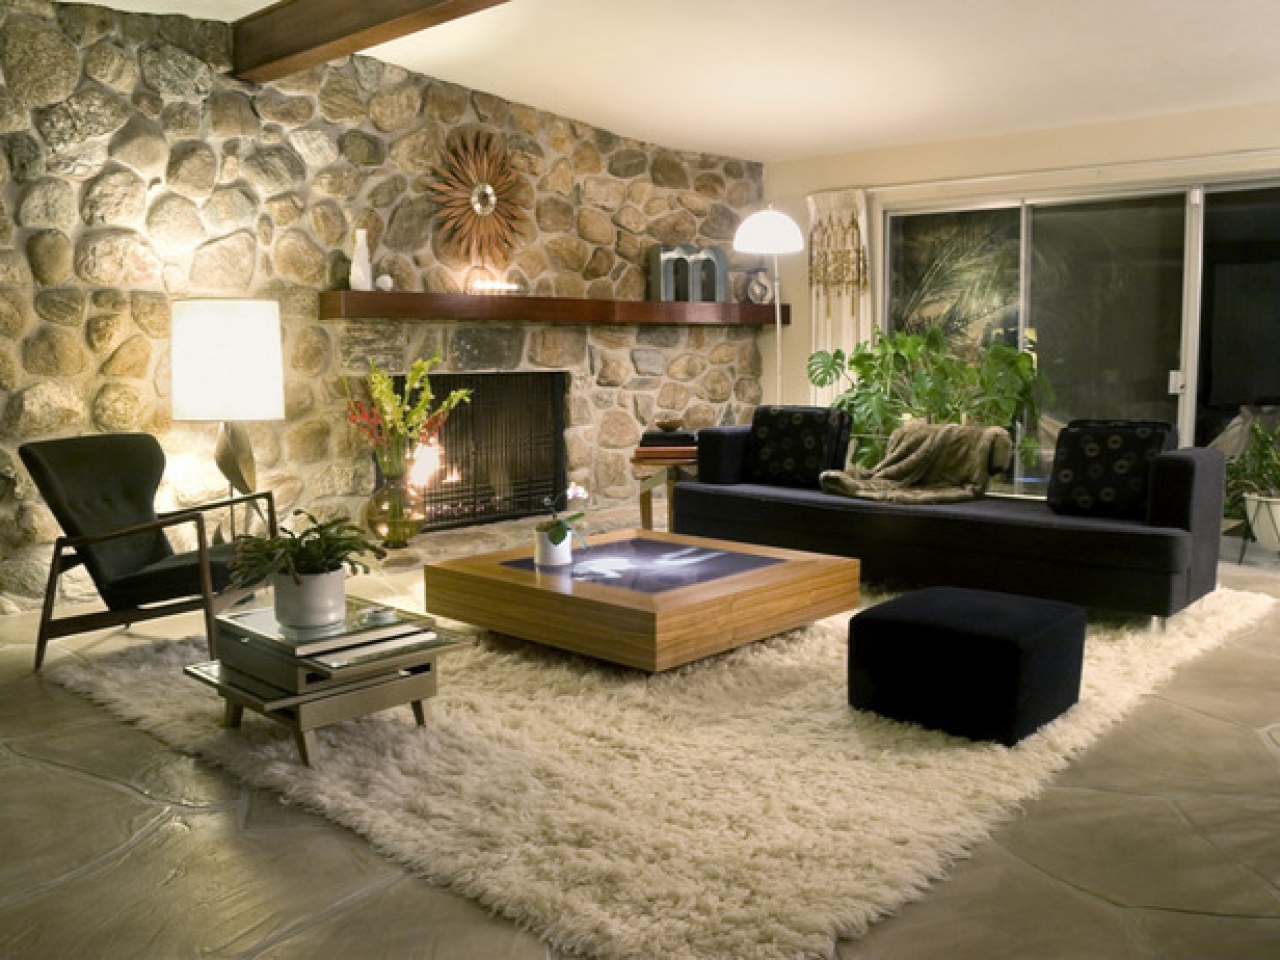 30 Modern Home Decor Ideas - The WoW Style